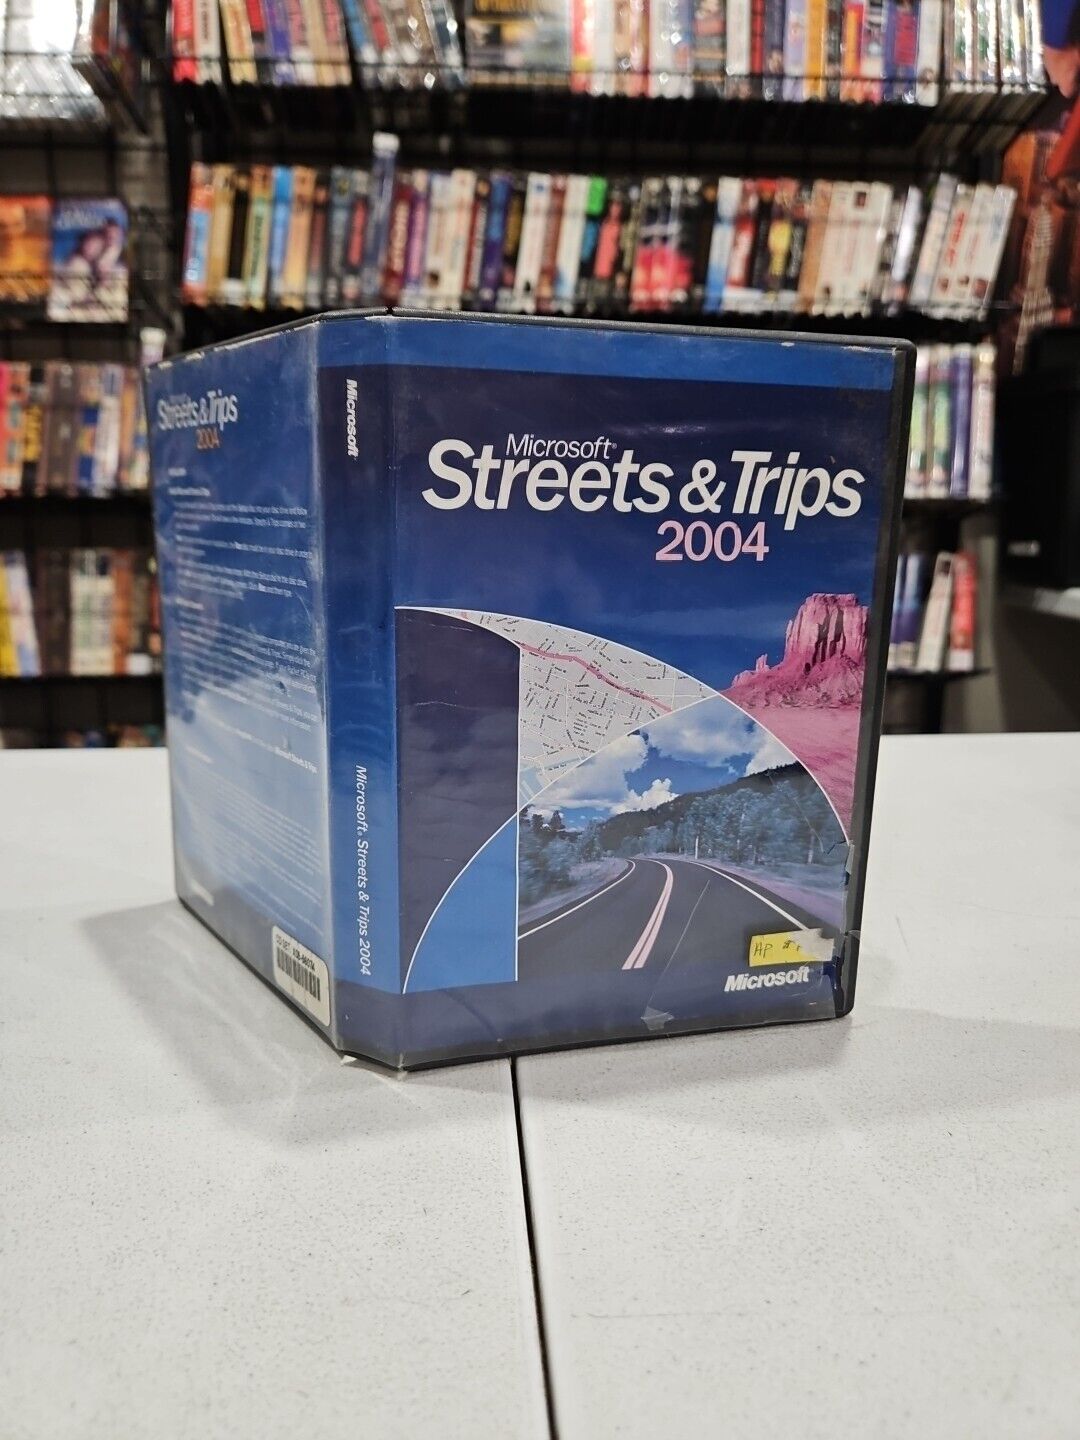 Microsoft Streets and Trips 2004 CD rom 💿 THE MOVIE KINGDOM 📀 S